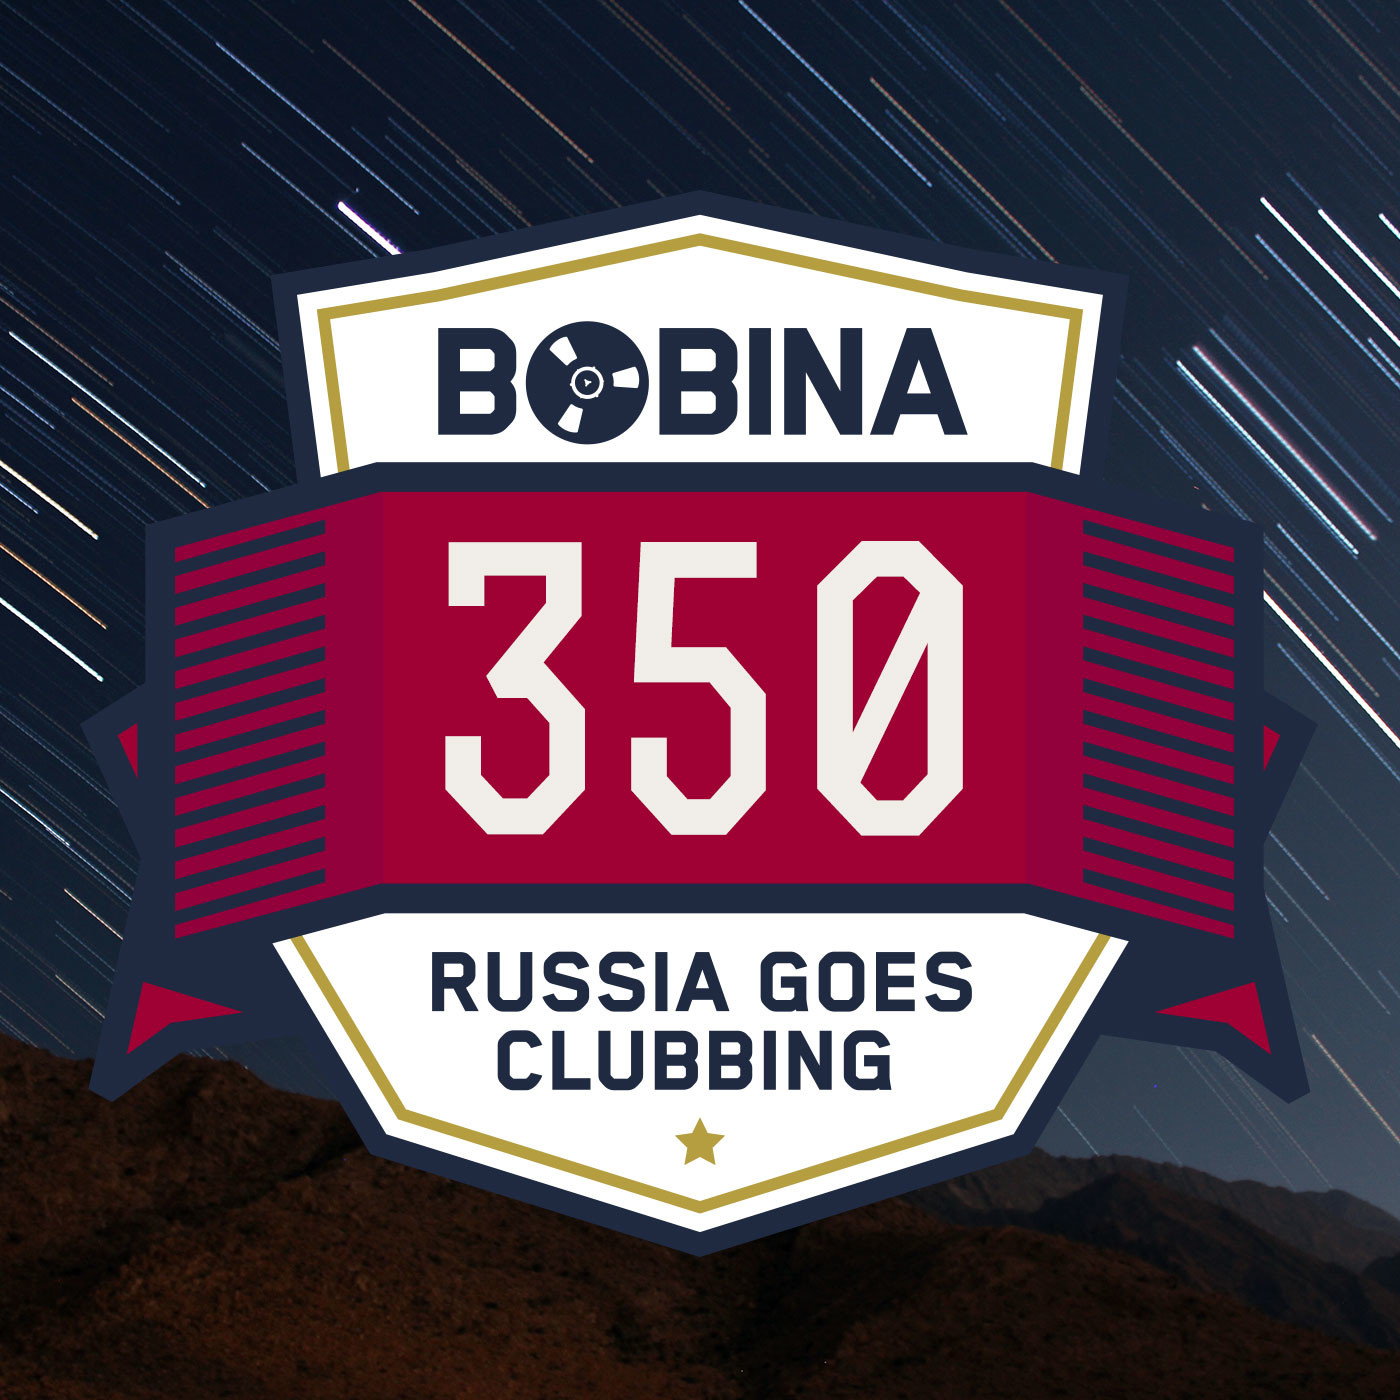 Nr. 350 Russia Goes Clubbing